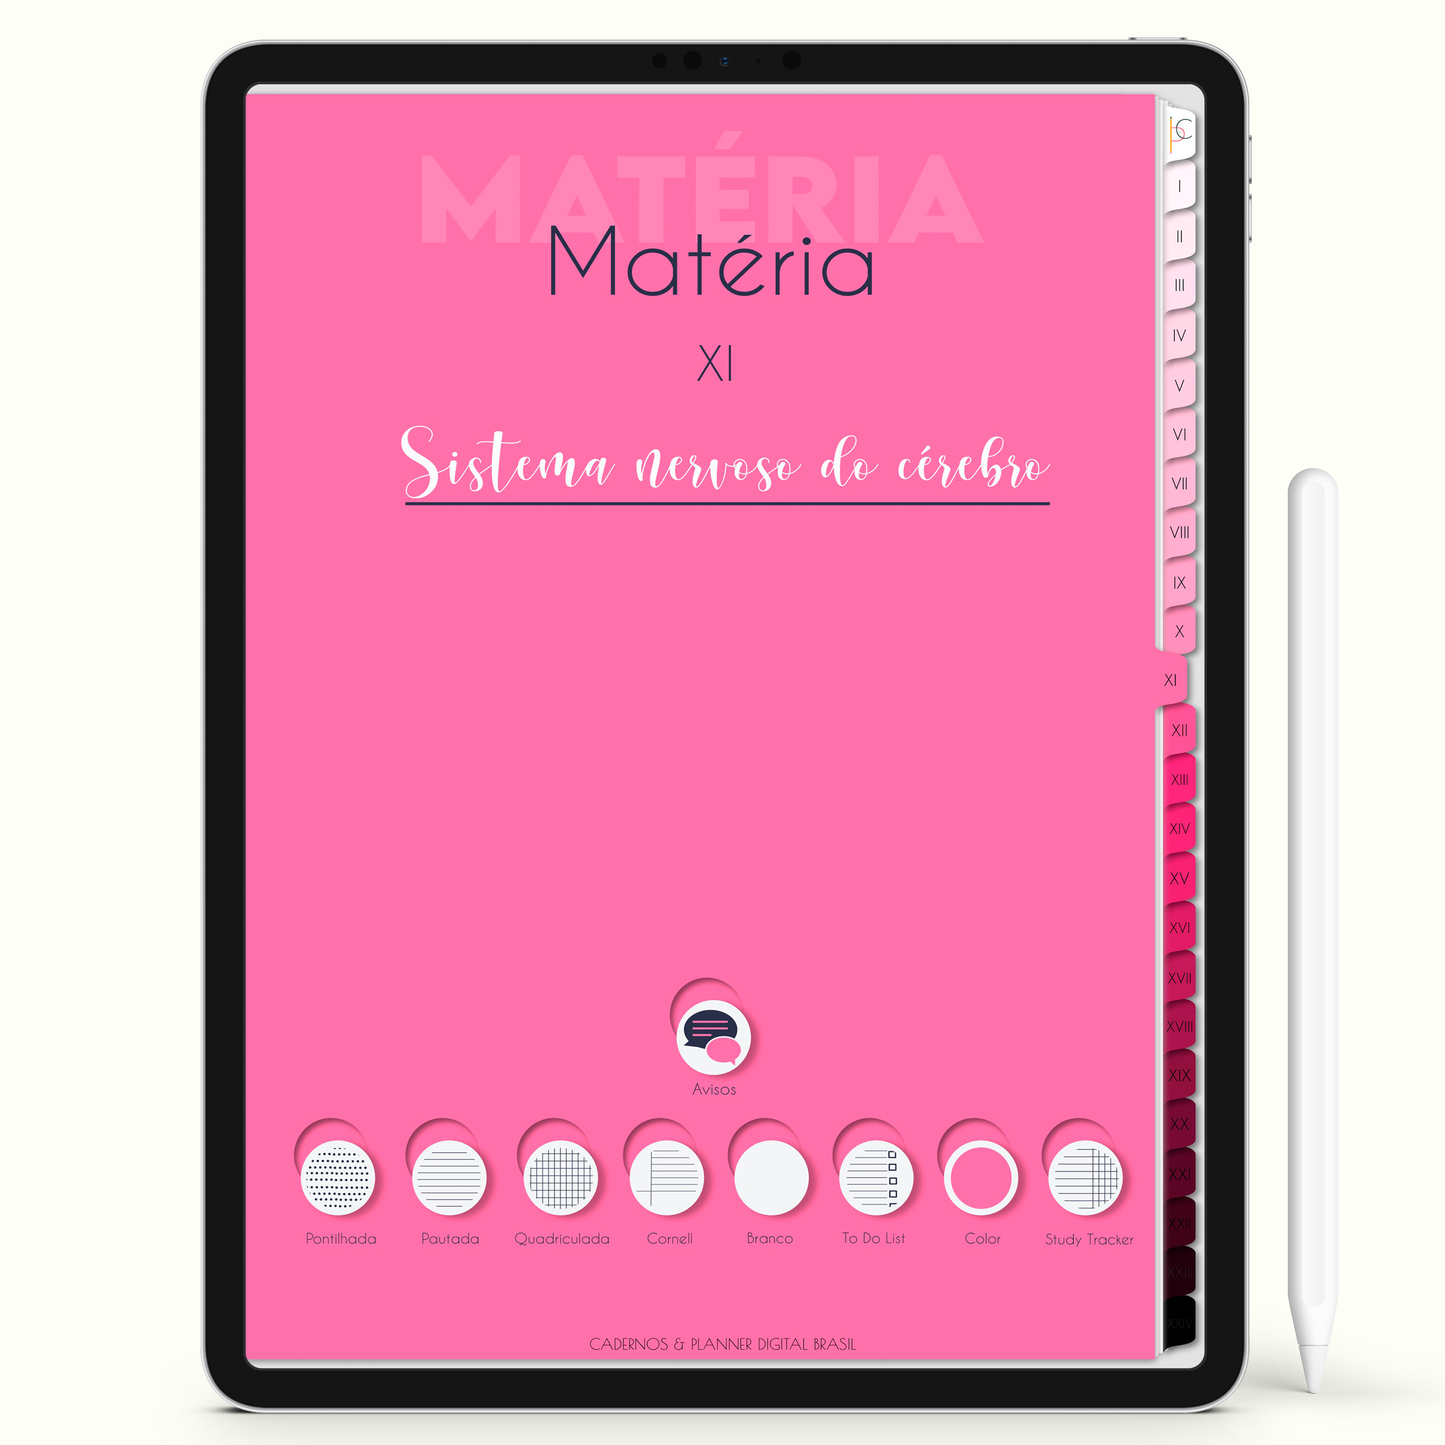 Caderno Digital Blush Bela Noite 24 Matérias • iPad Tablet Android • Download instantâneo • Sustentável